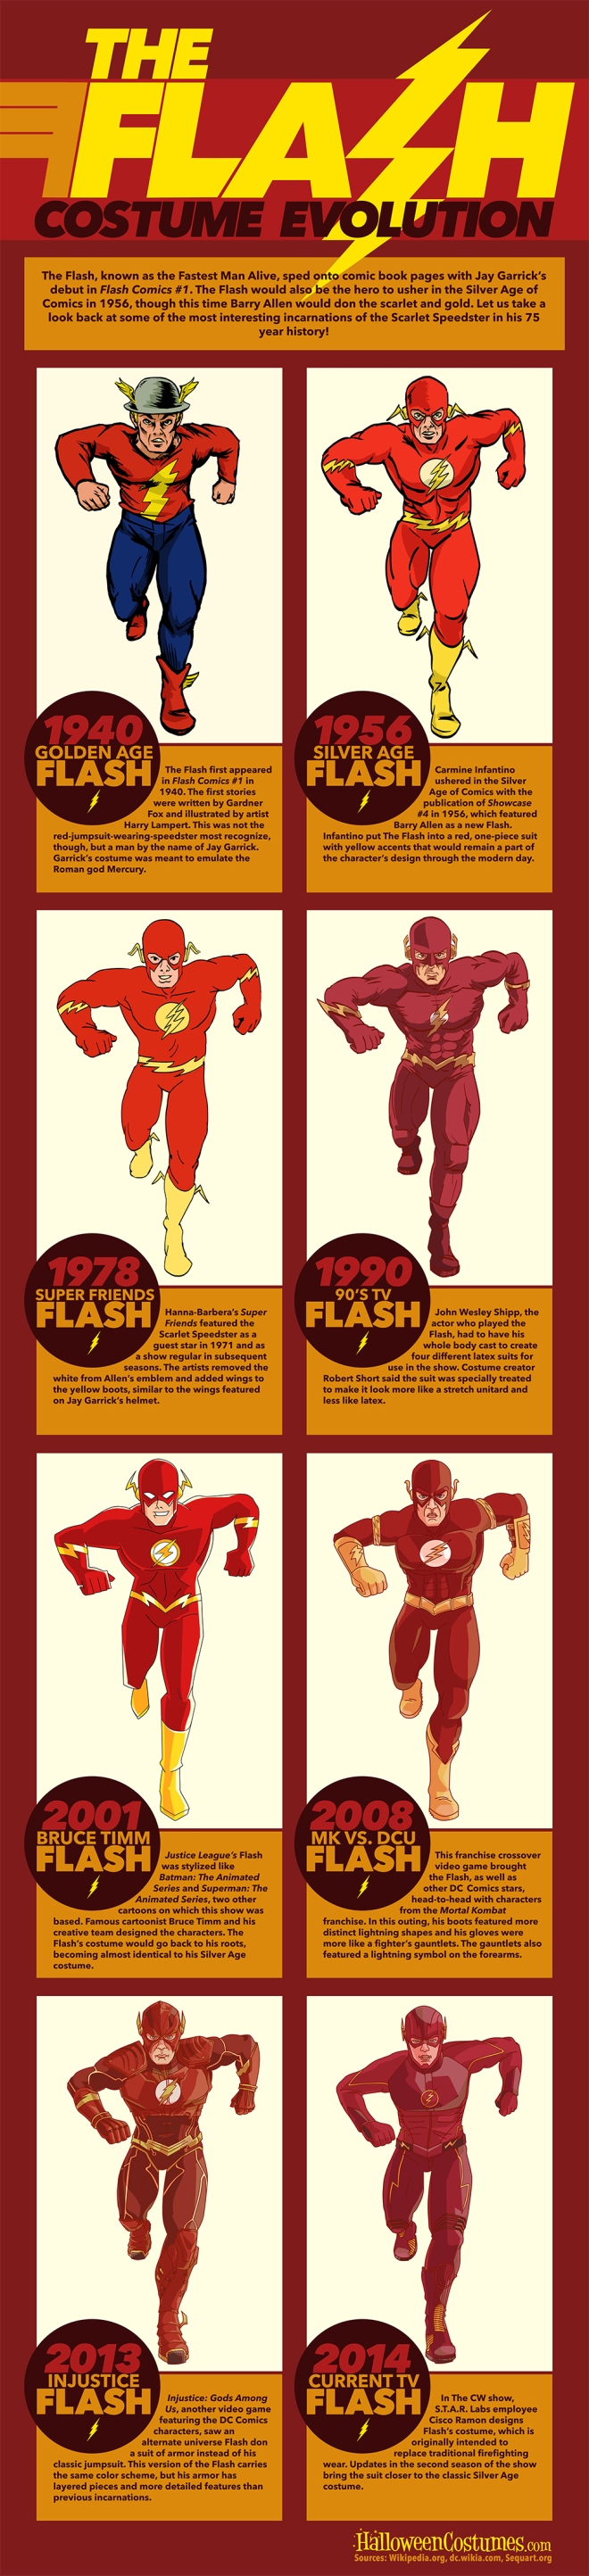 Flash-Evolution-Infographic